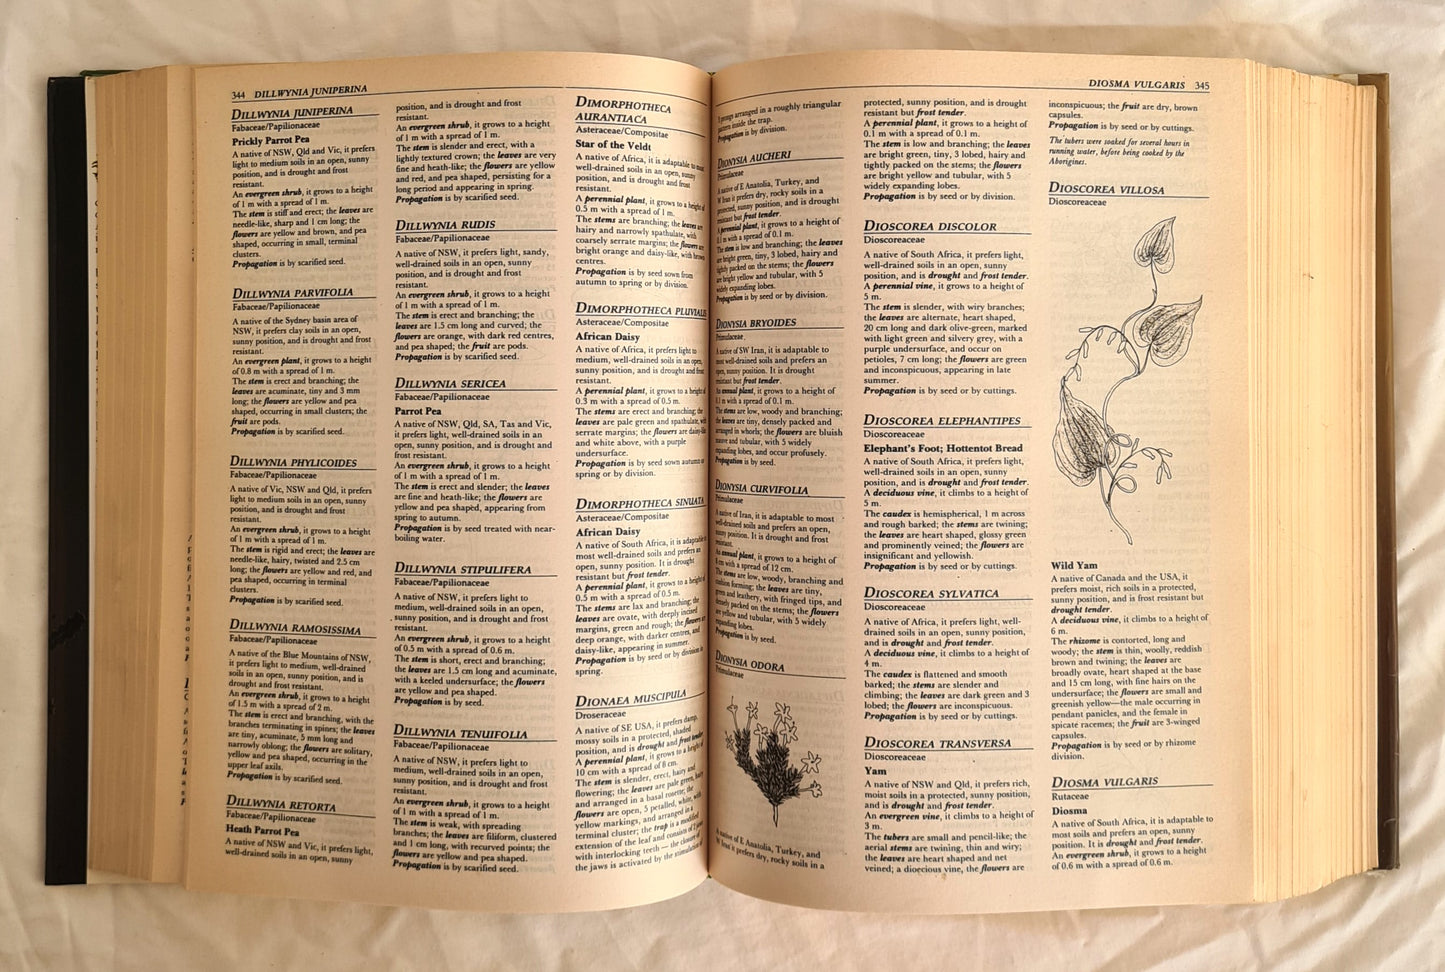 Encyclopaedia Botanica by Frances Bodkin